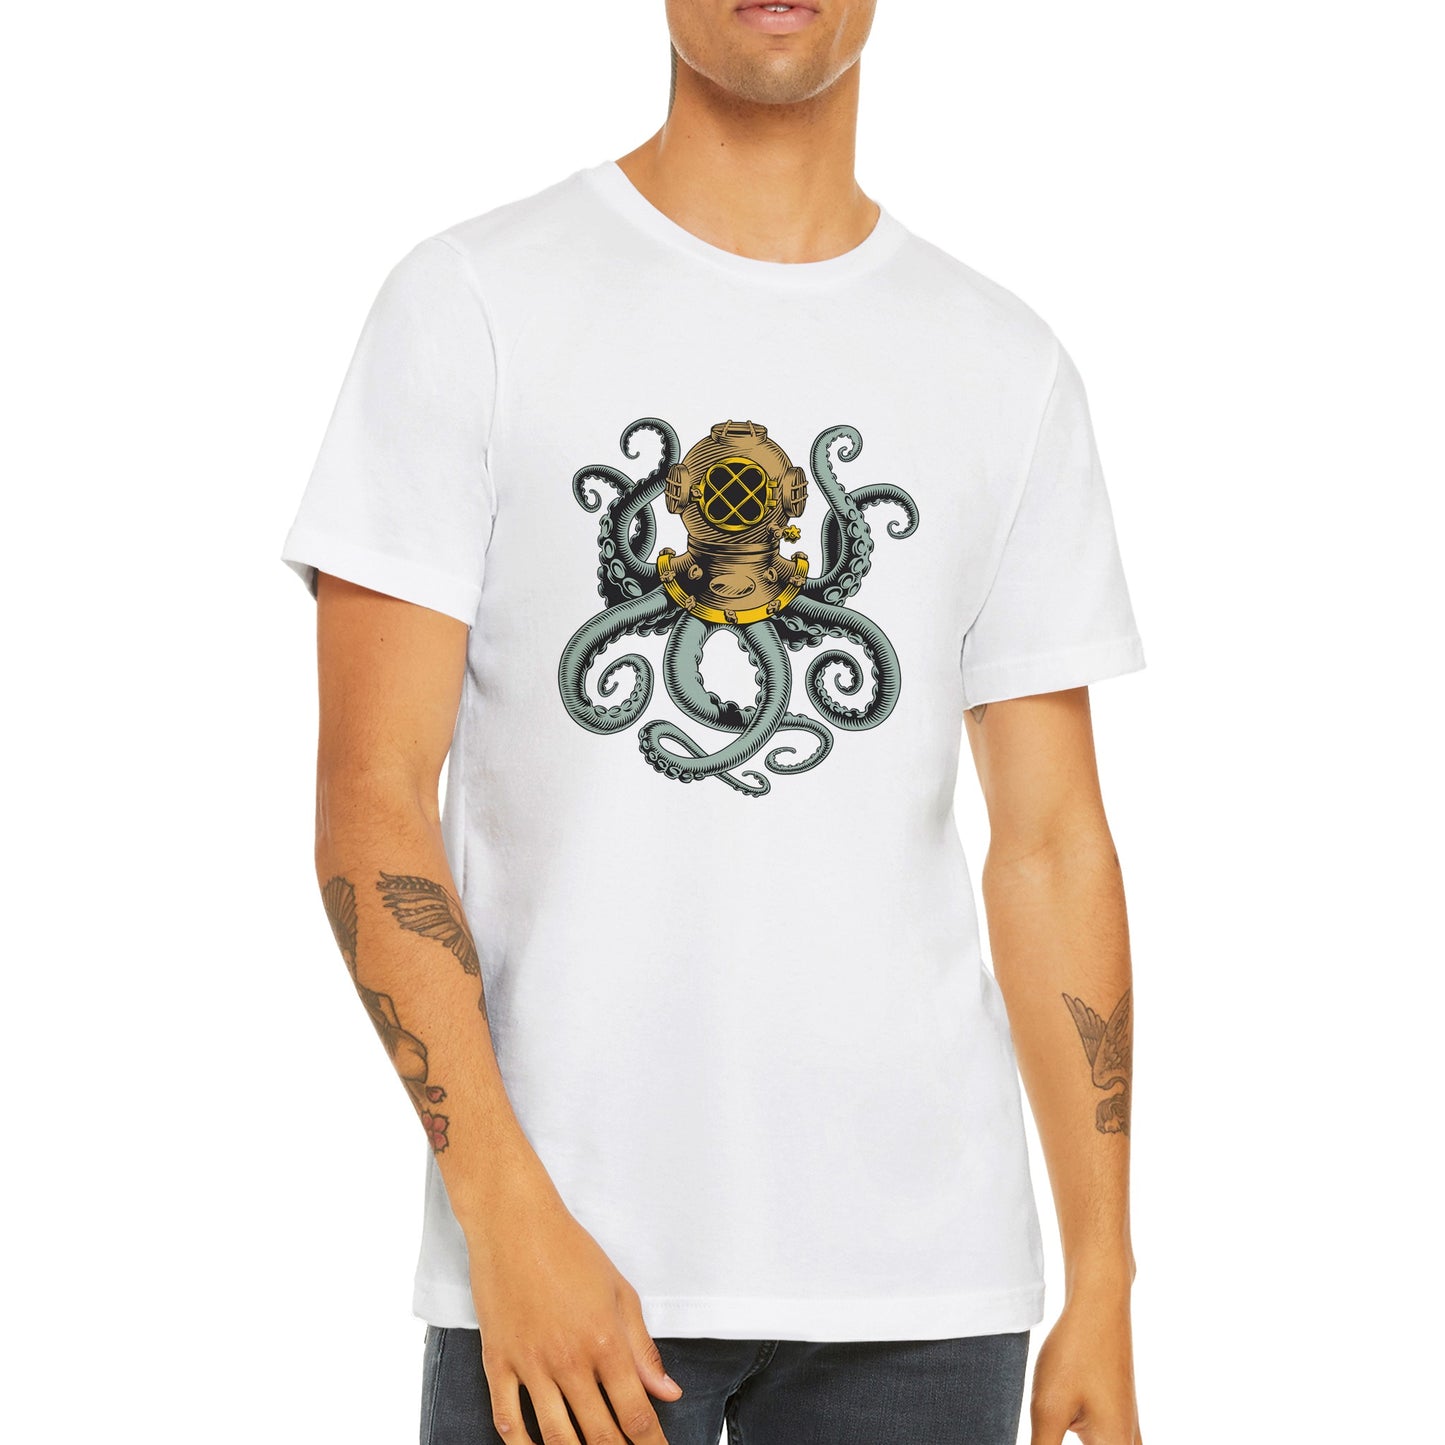 Octopus with diving helmet T-shirt